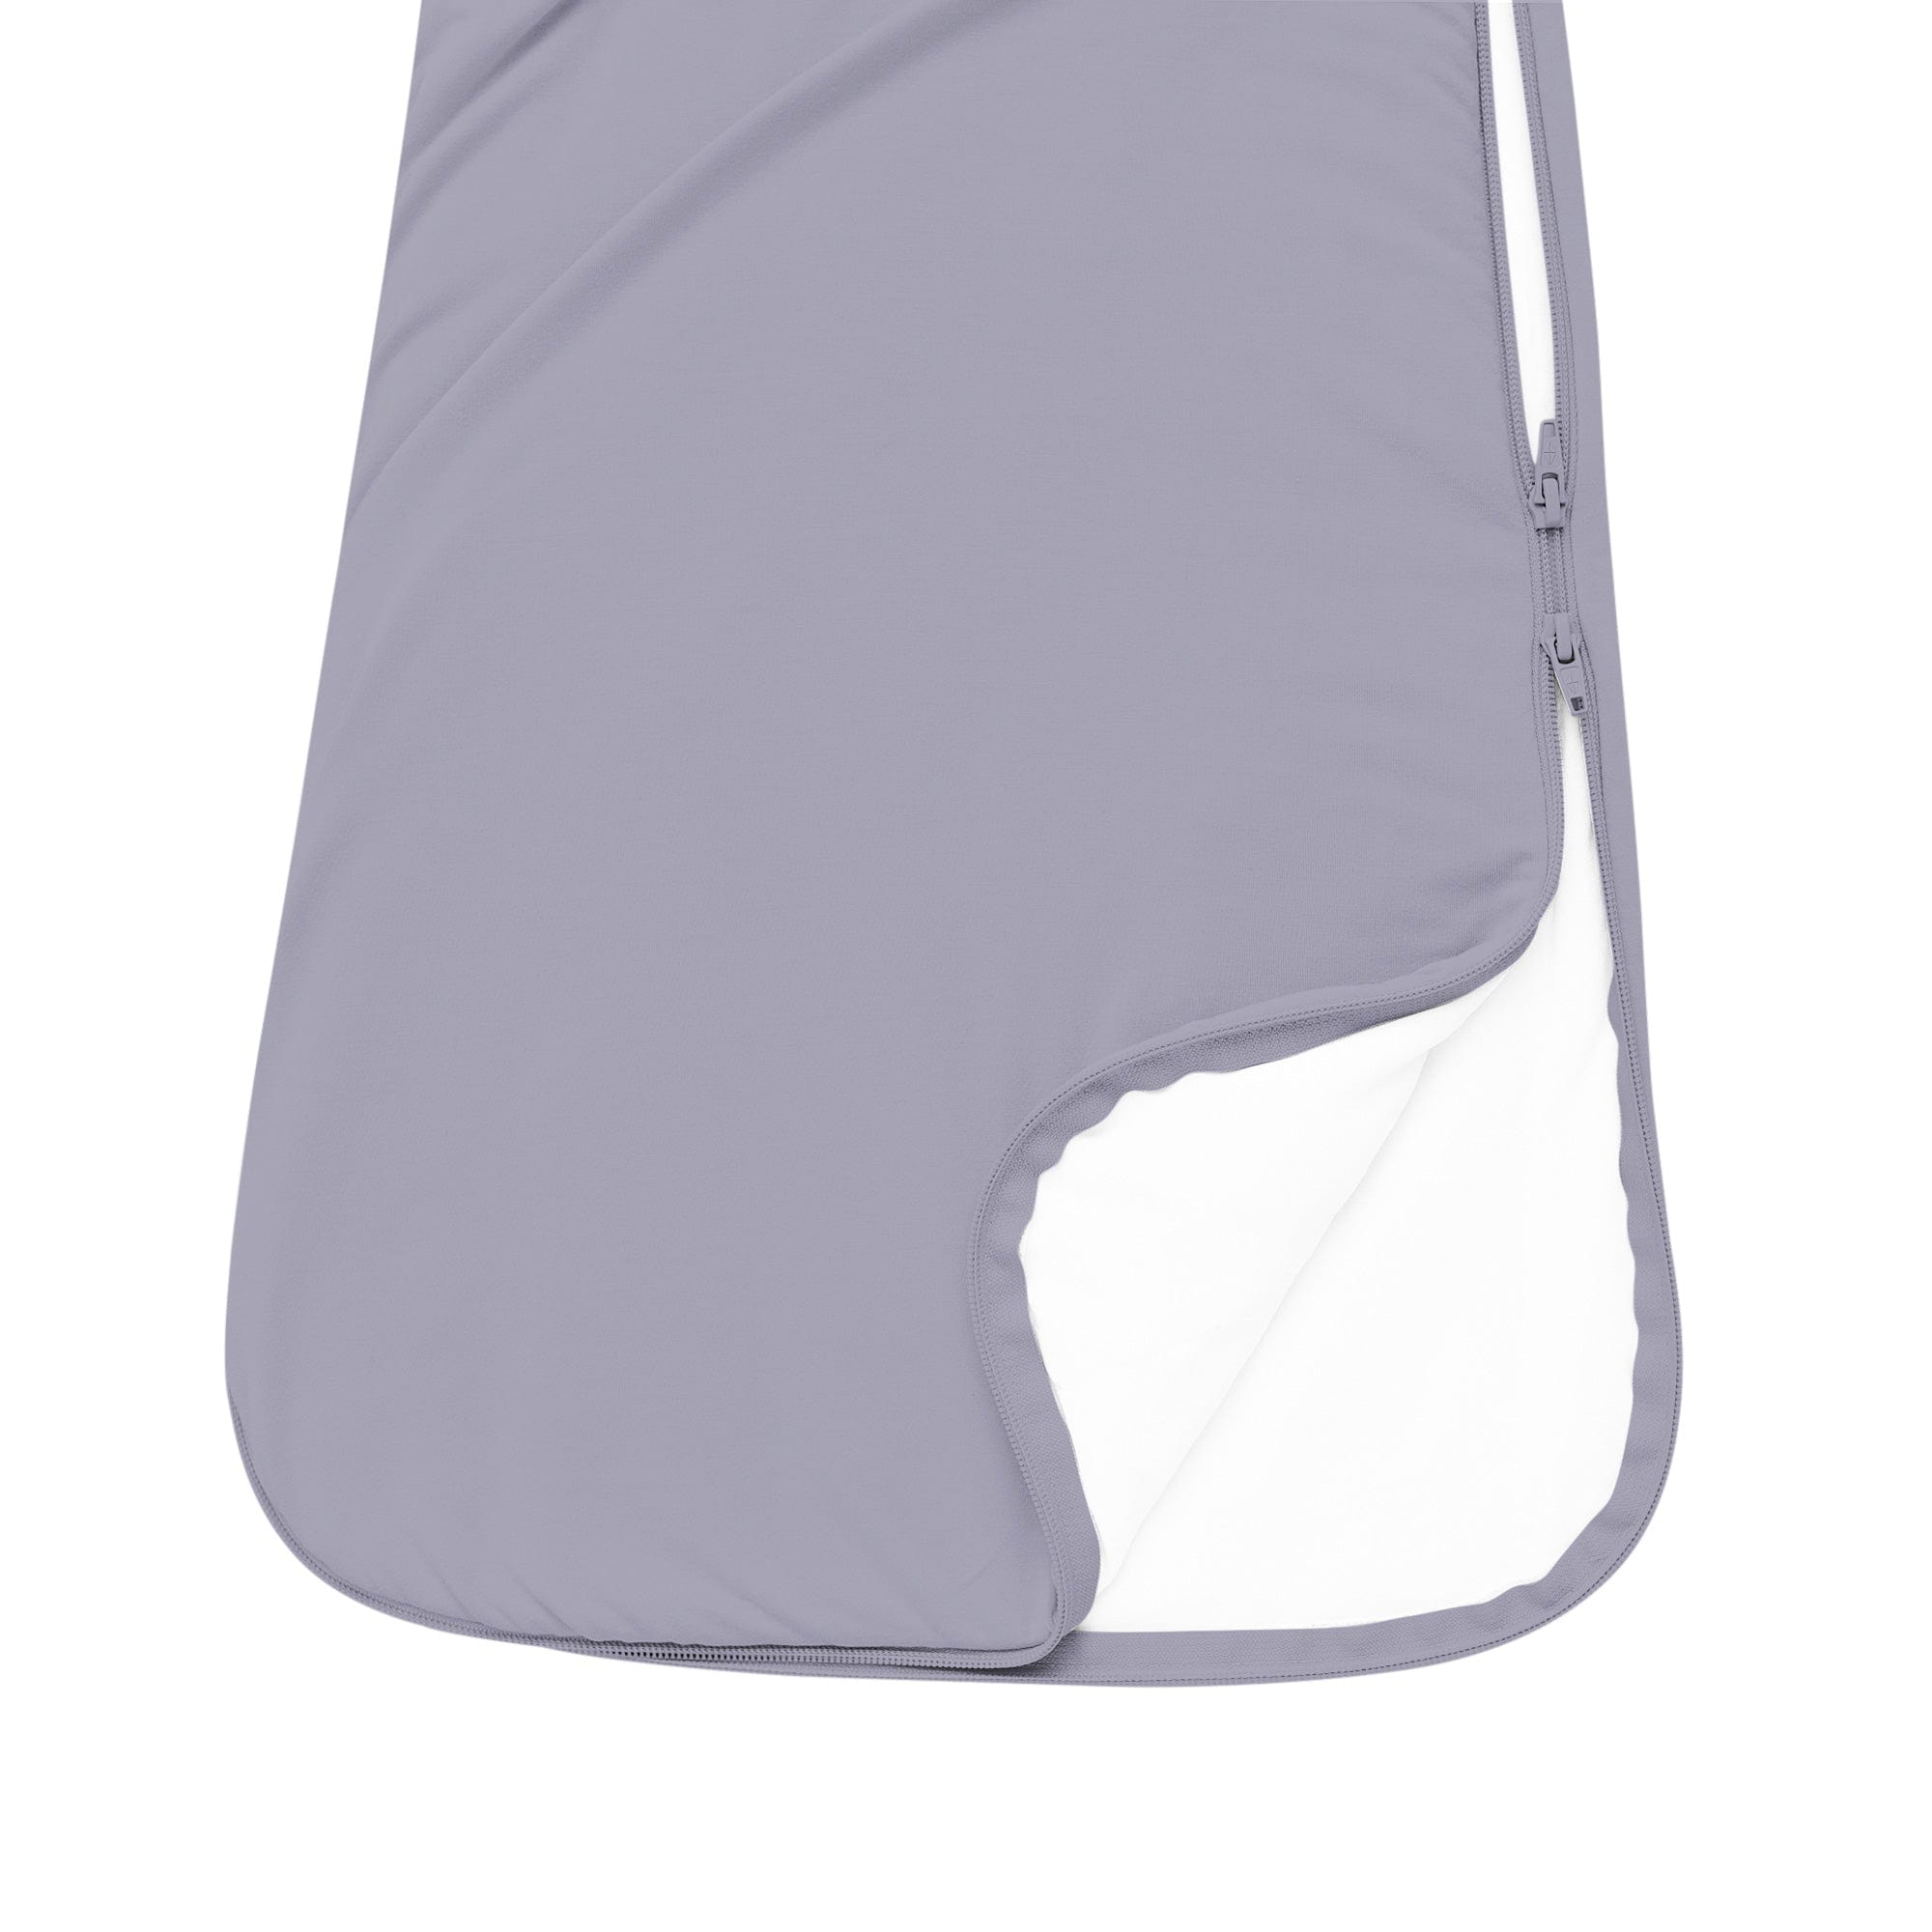 Kyte Baby Sleep Bag 1.0 Tog Sleep Bag in Haze 1.0